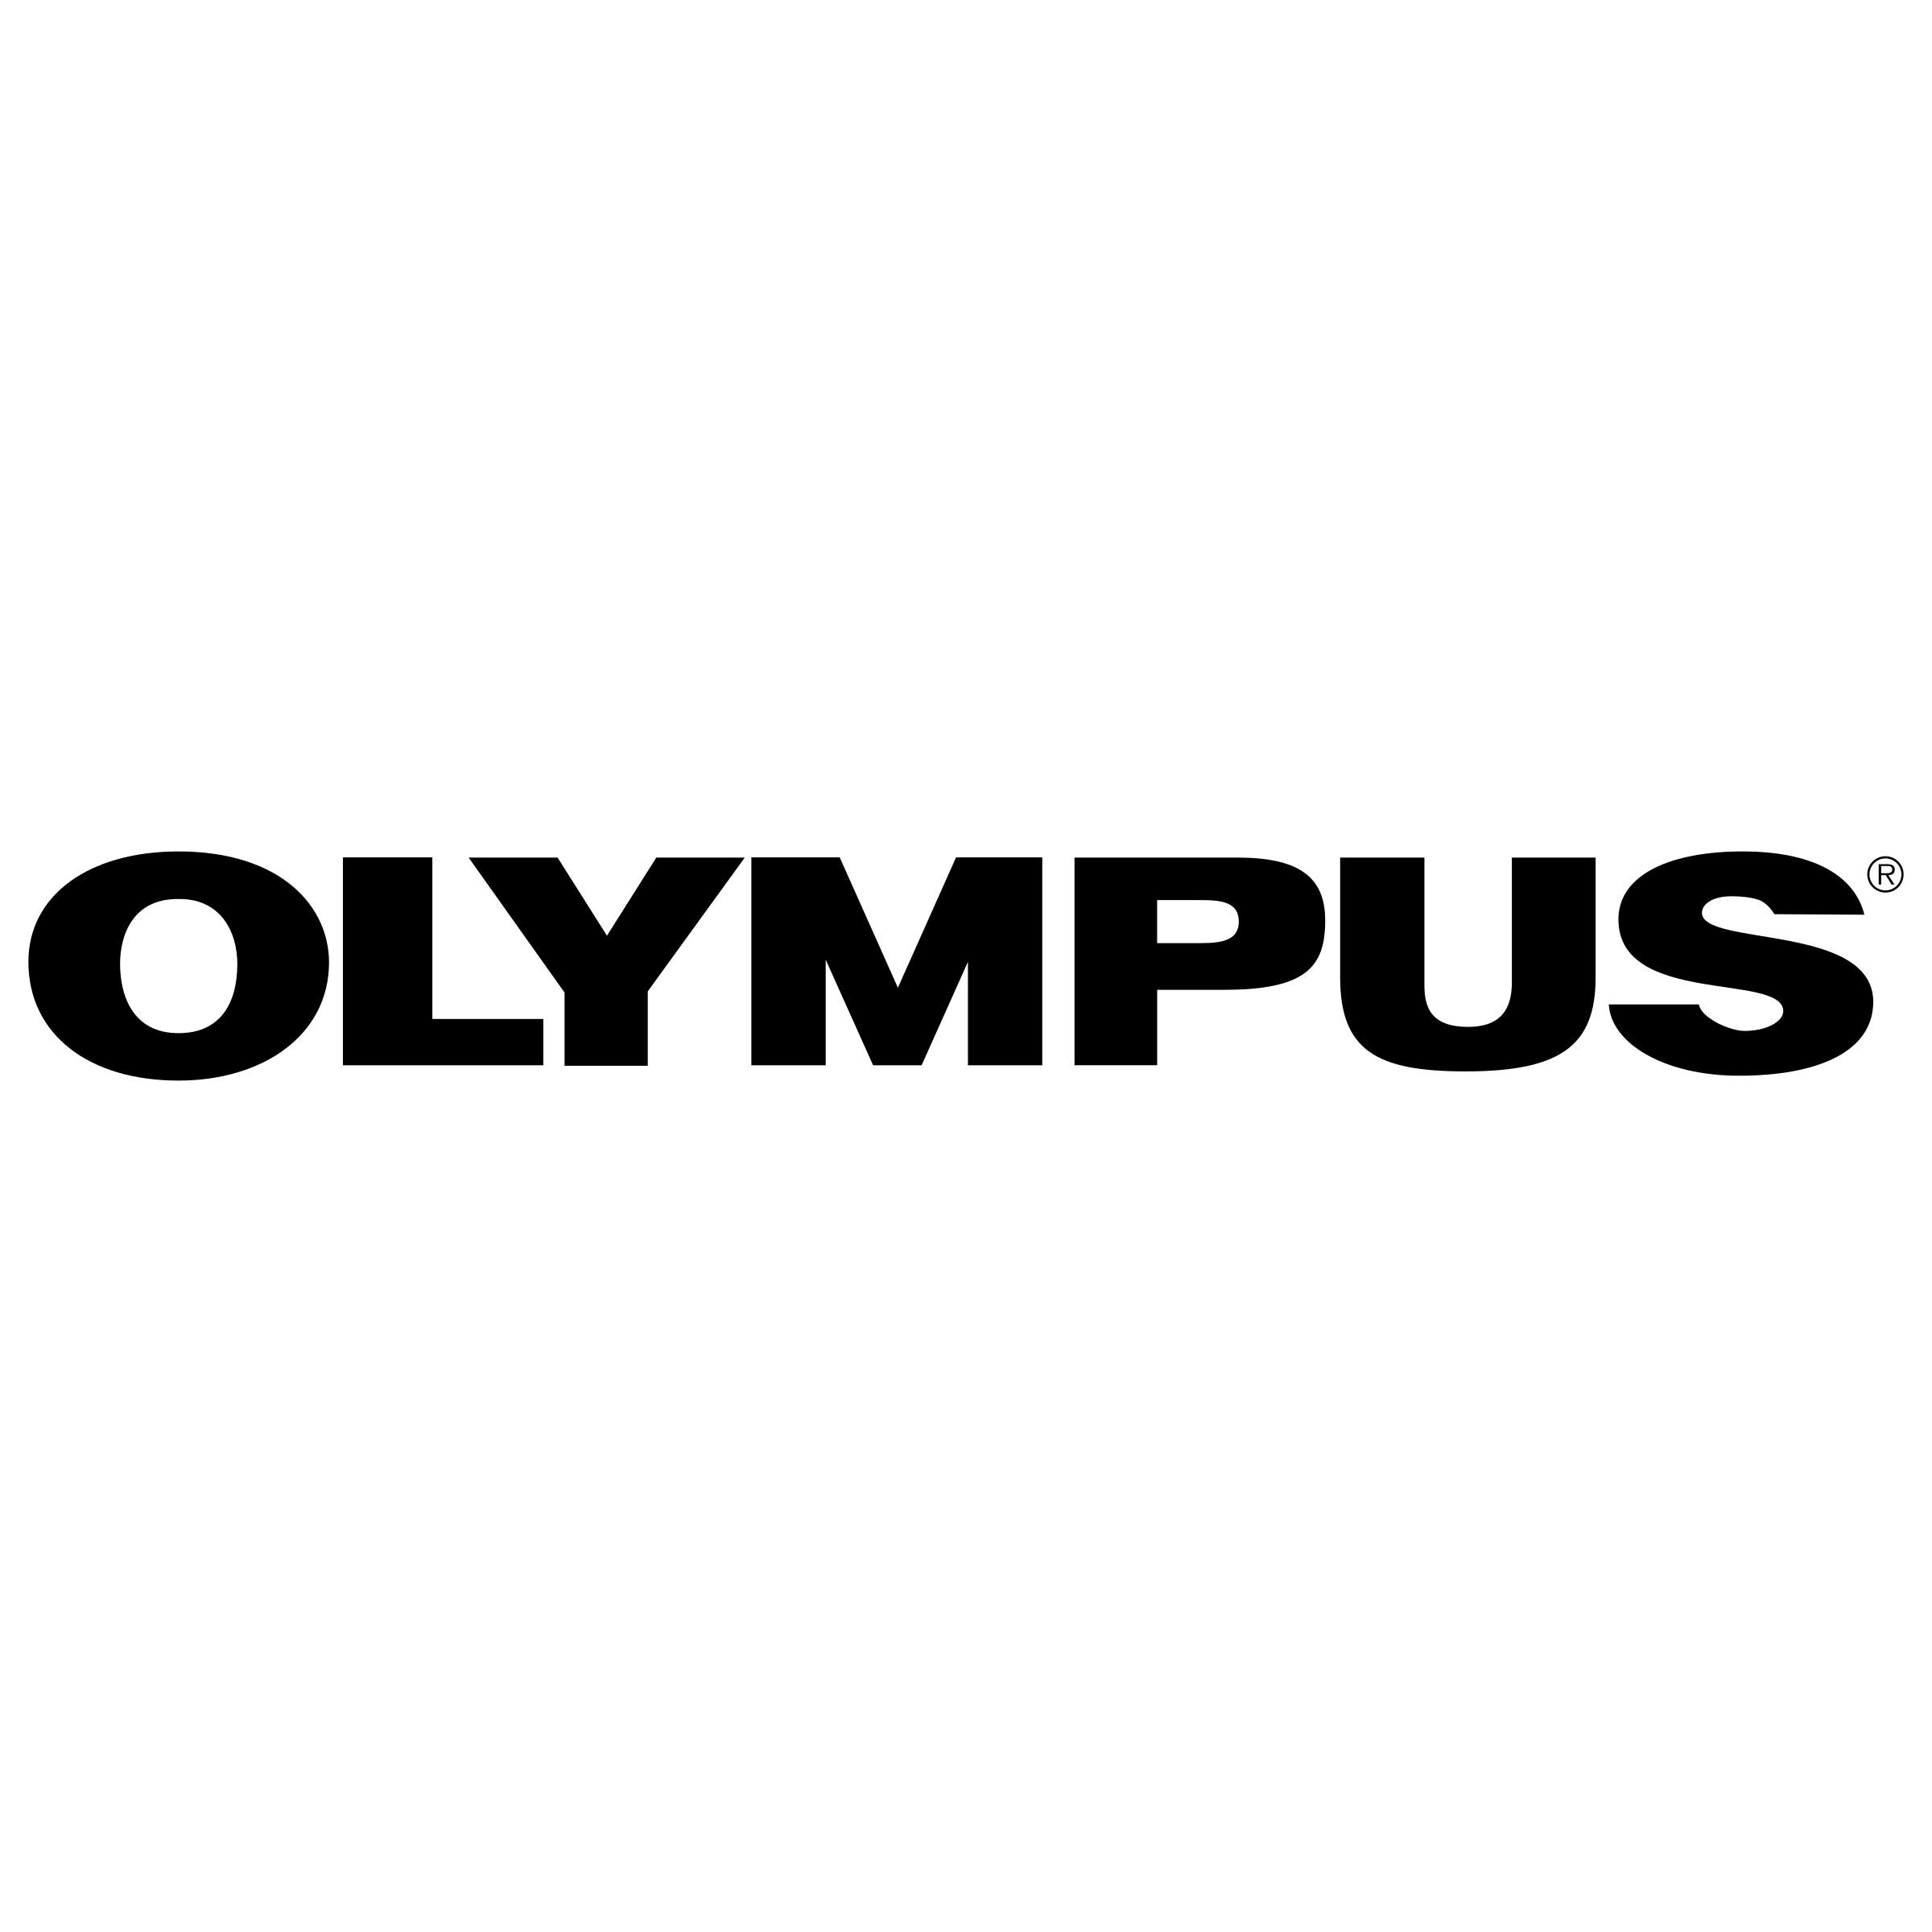 Olympus Logo - Olympus Logo PNG Transparent & SVG Vector - Freebie Supply